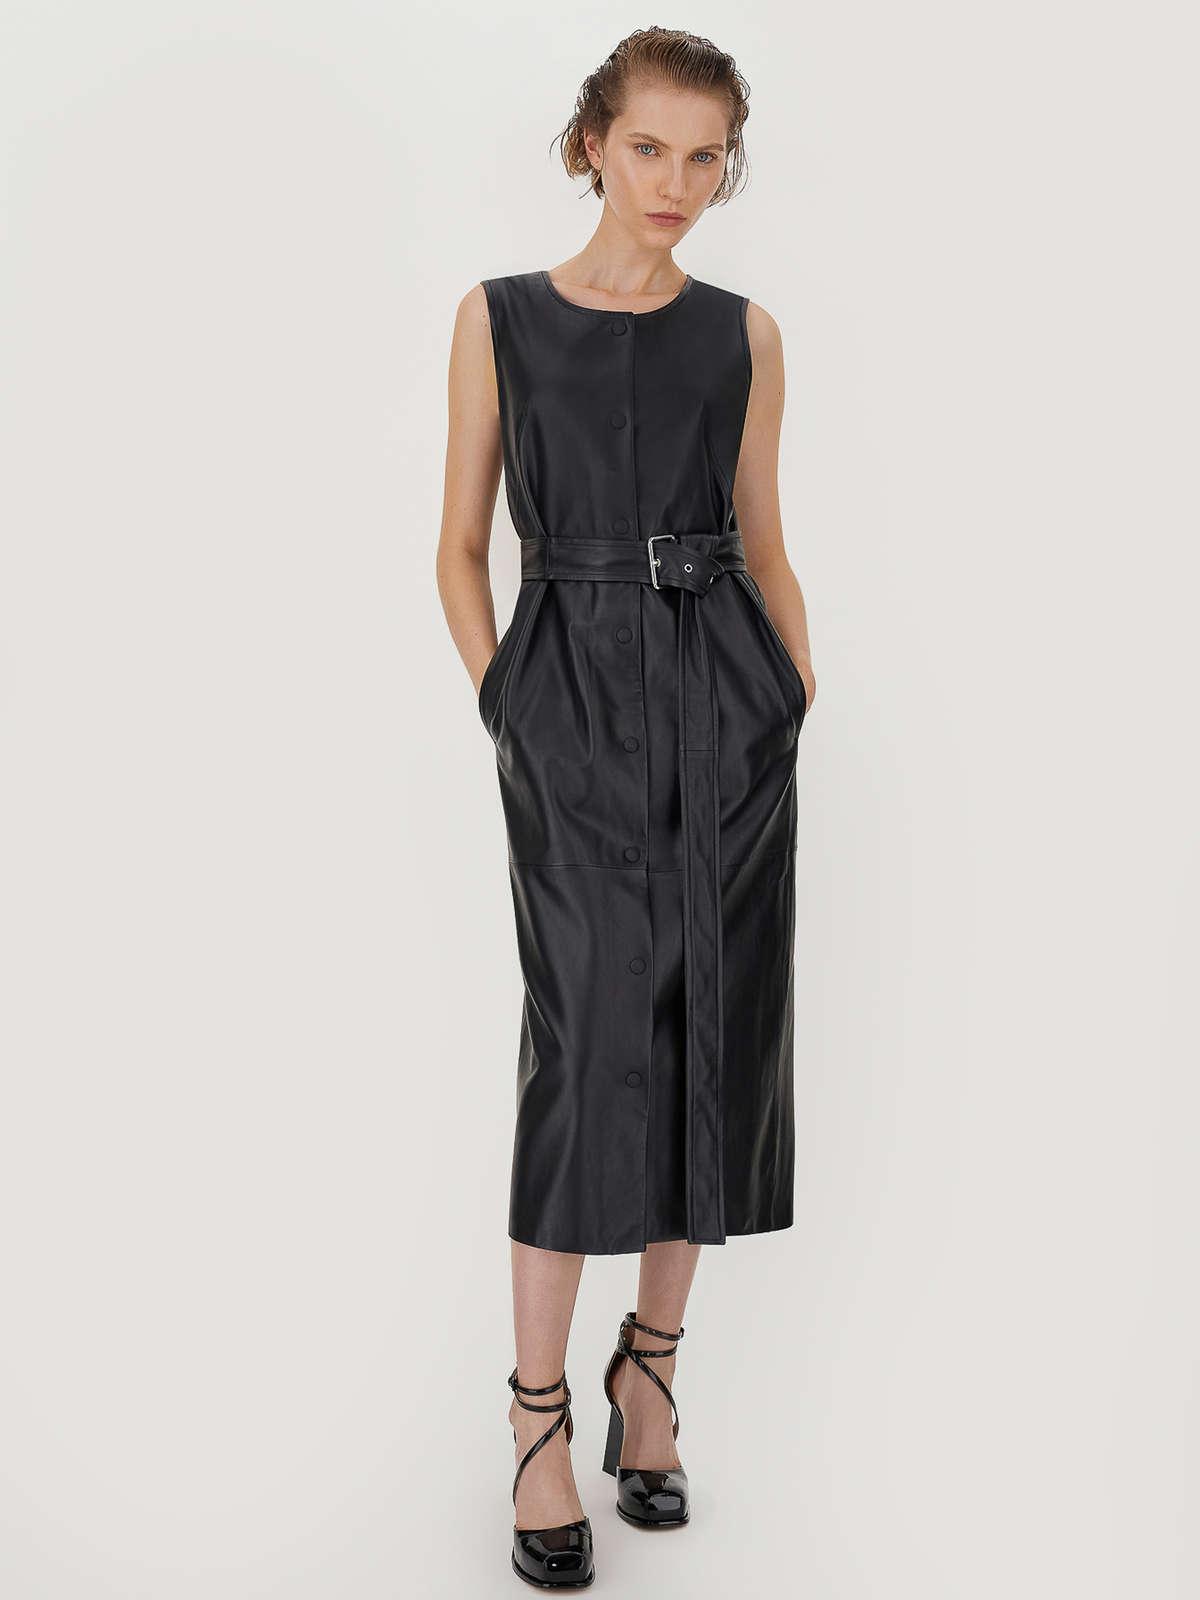 Womens Max Mara Dresses | Sleeveless Nappa Leather Dress Black